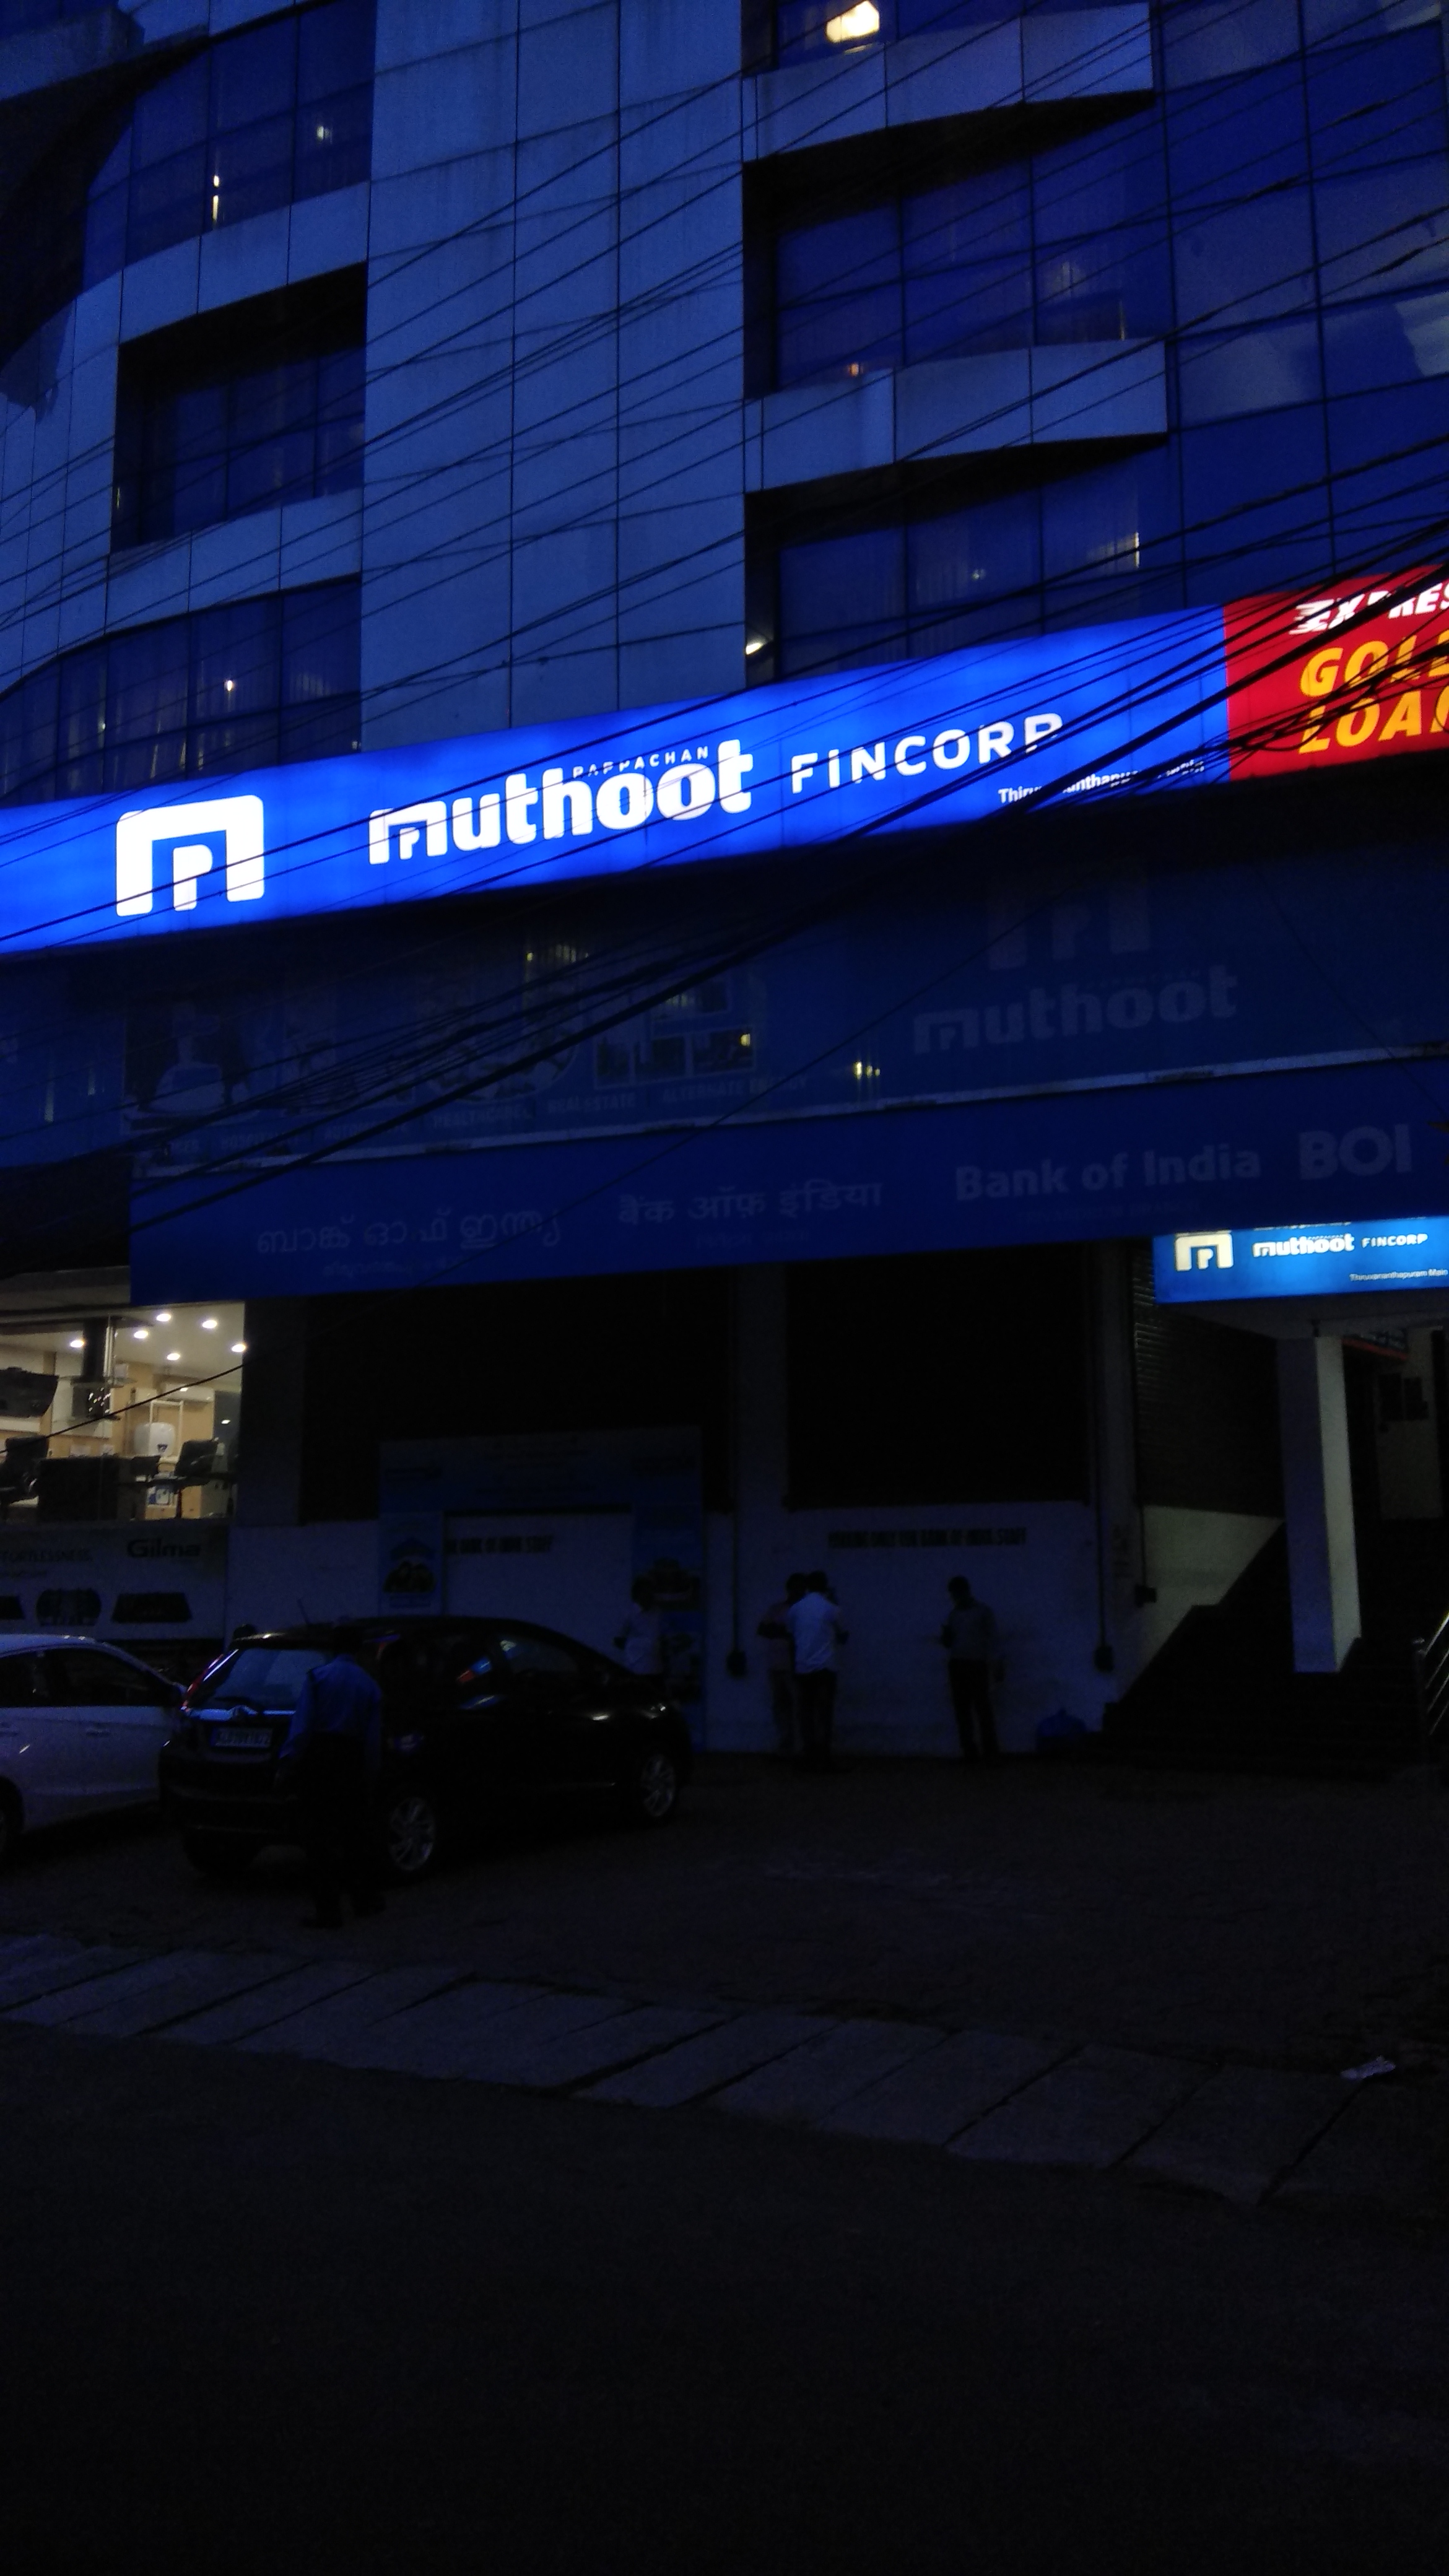 Muthoot Fincorp Gold Loan Services in Punnen Road, Thiruvananthapuram, Kerala